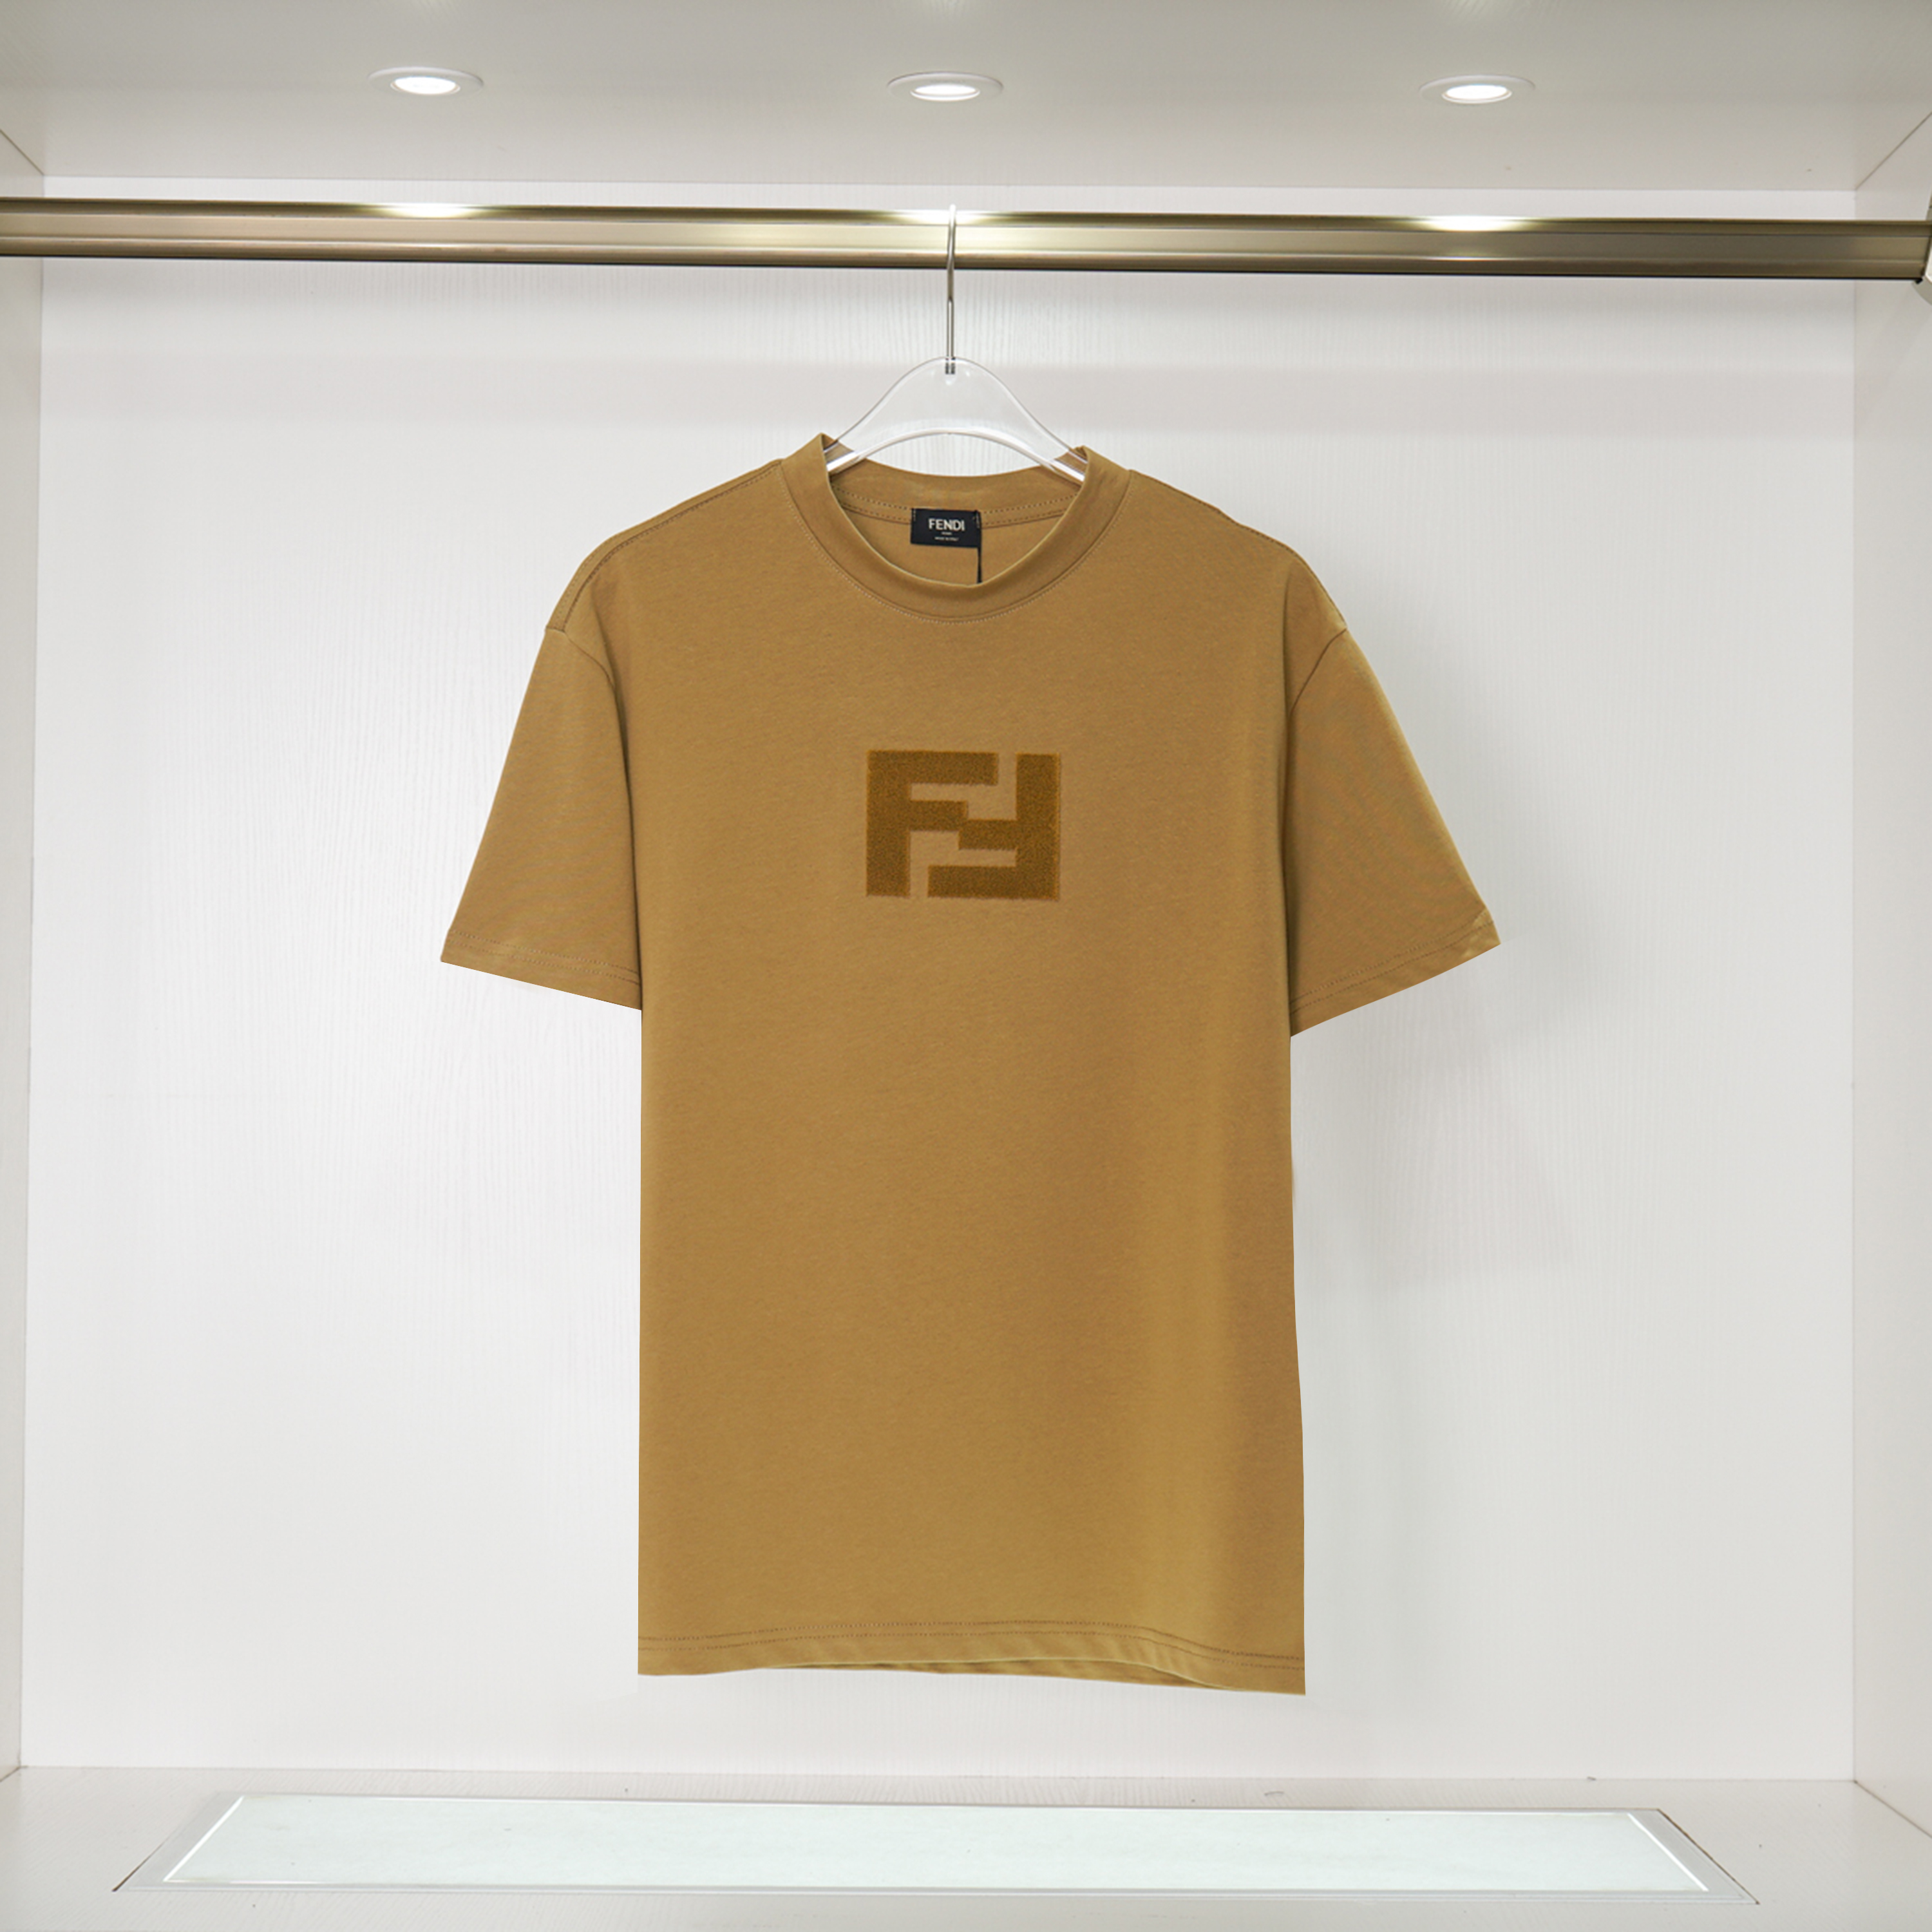 Fendi Short Sleeve T Shirt Unisex # 265530, cheap Fendi T Shirts For Men, only $26!